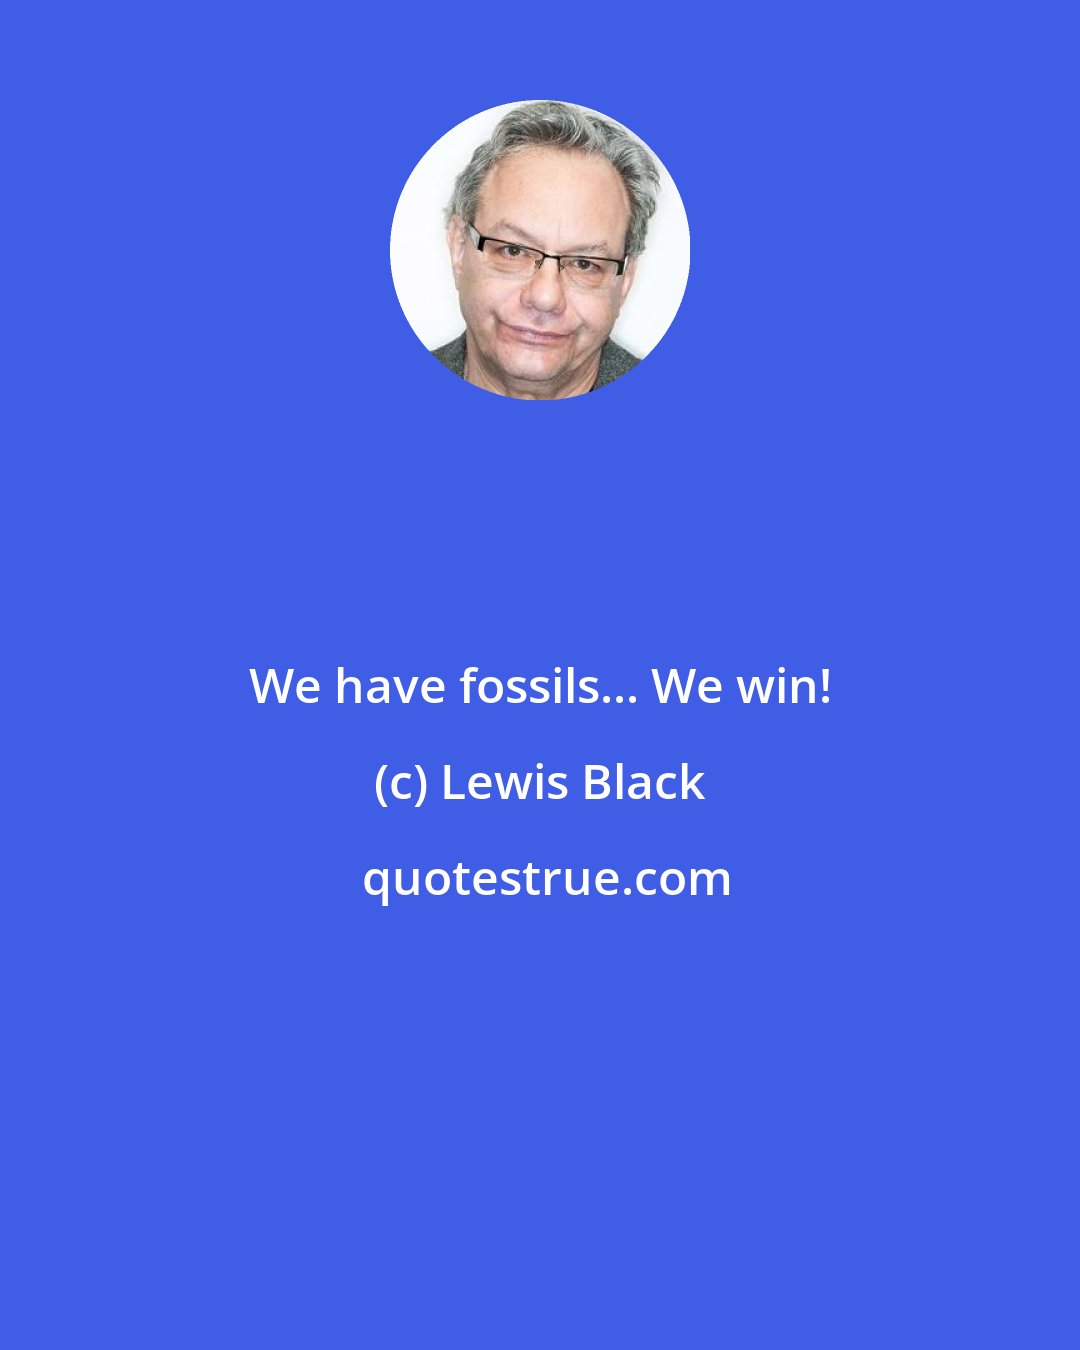 Lewis Black: We have fossils... We win!